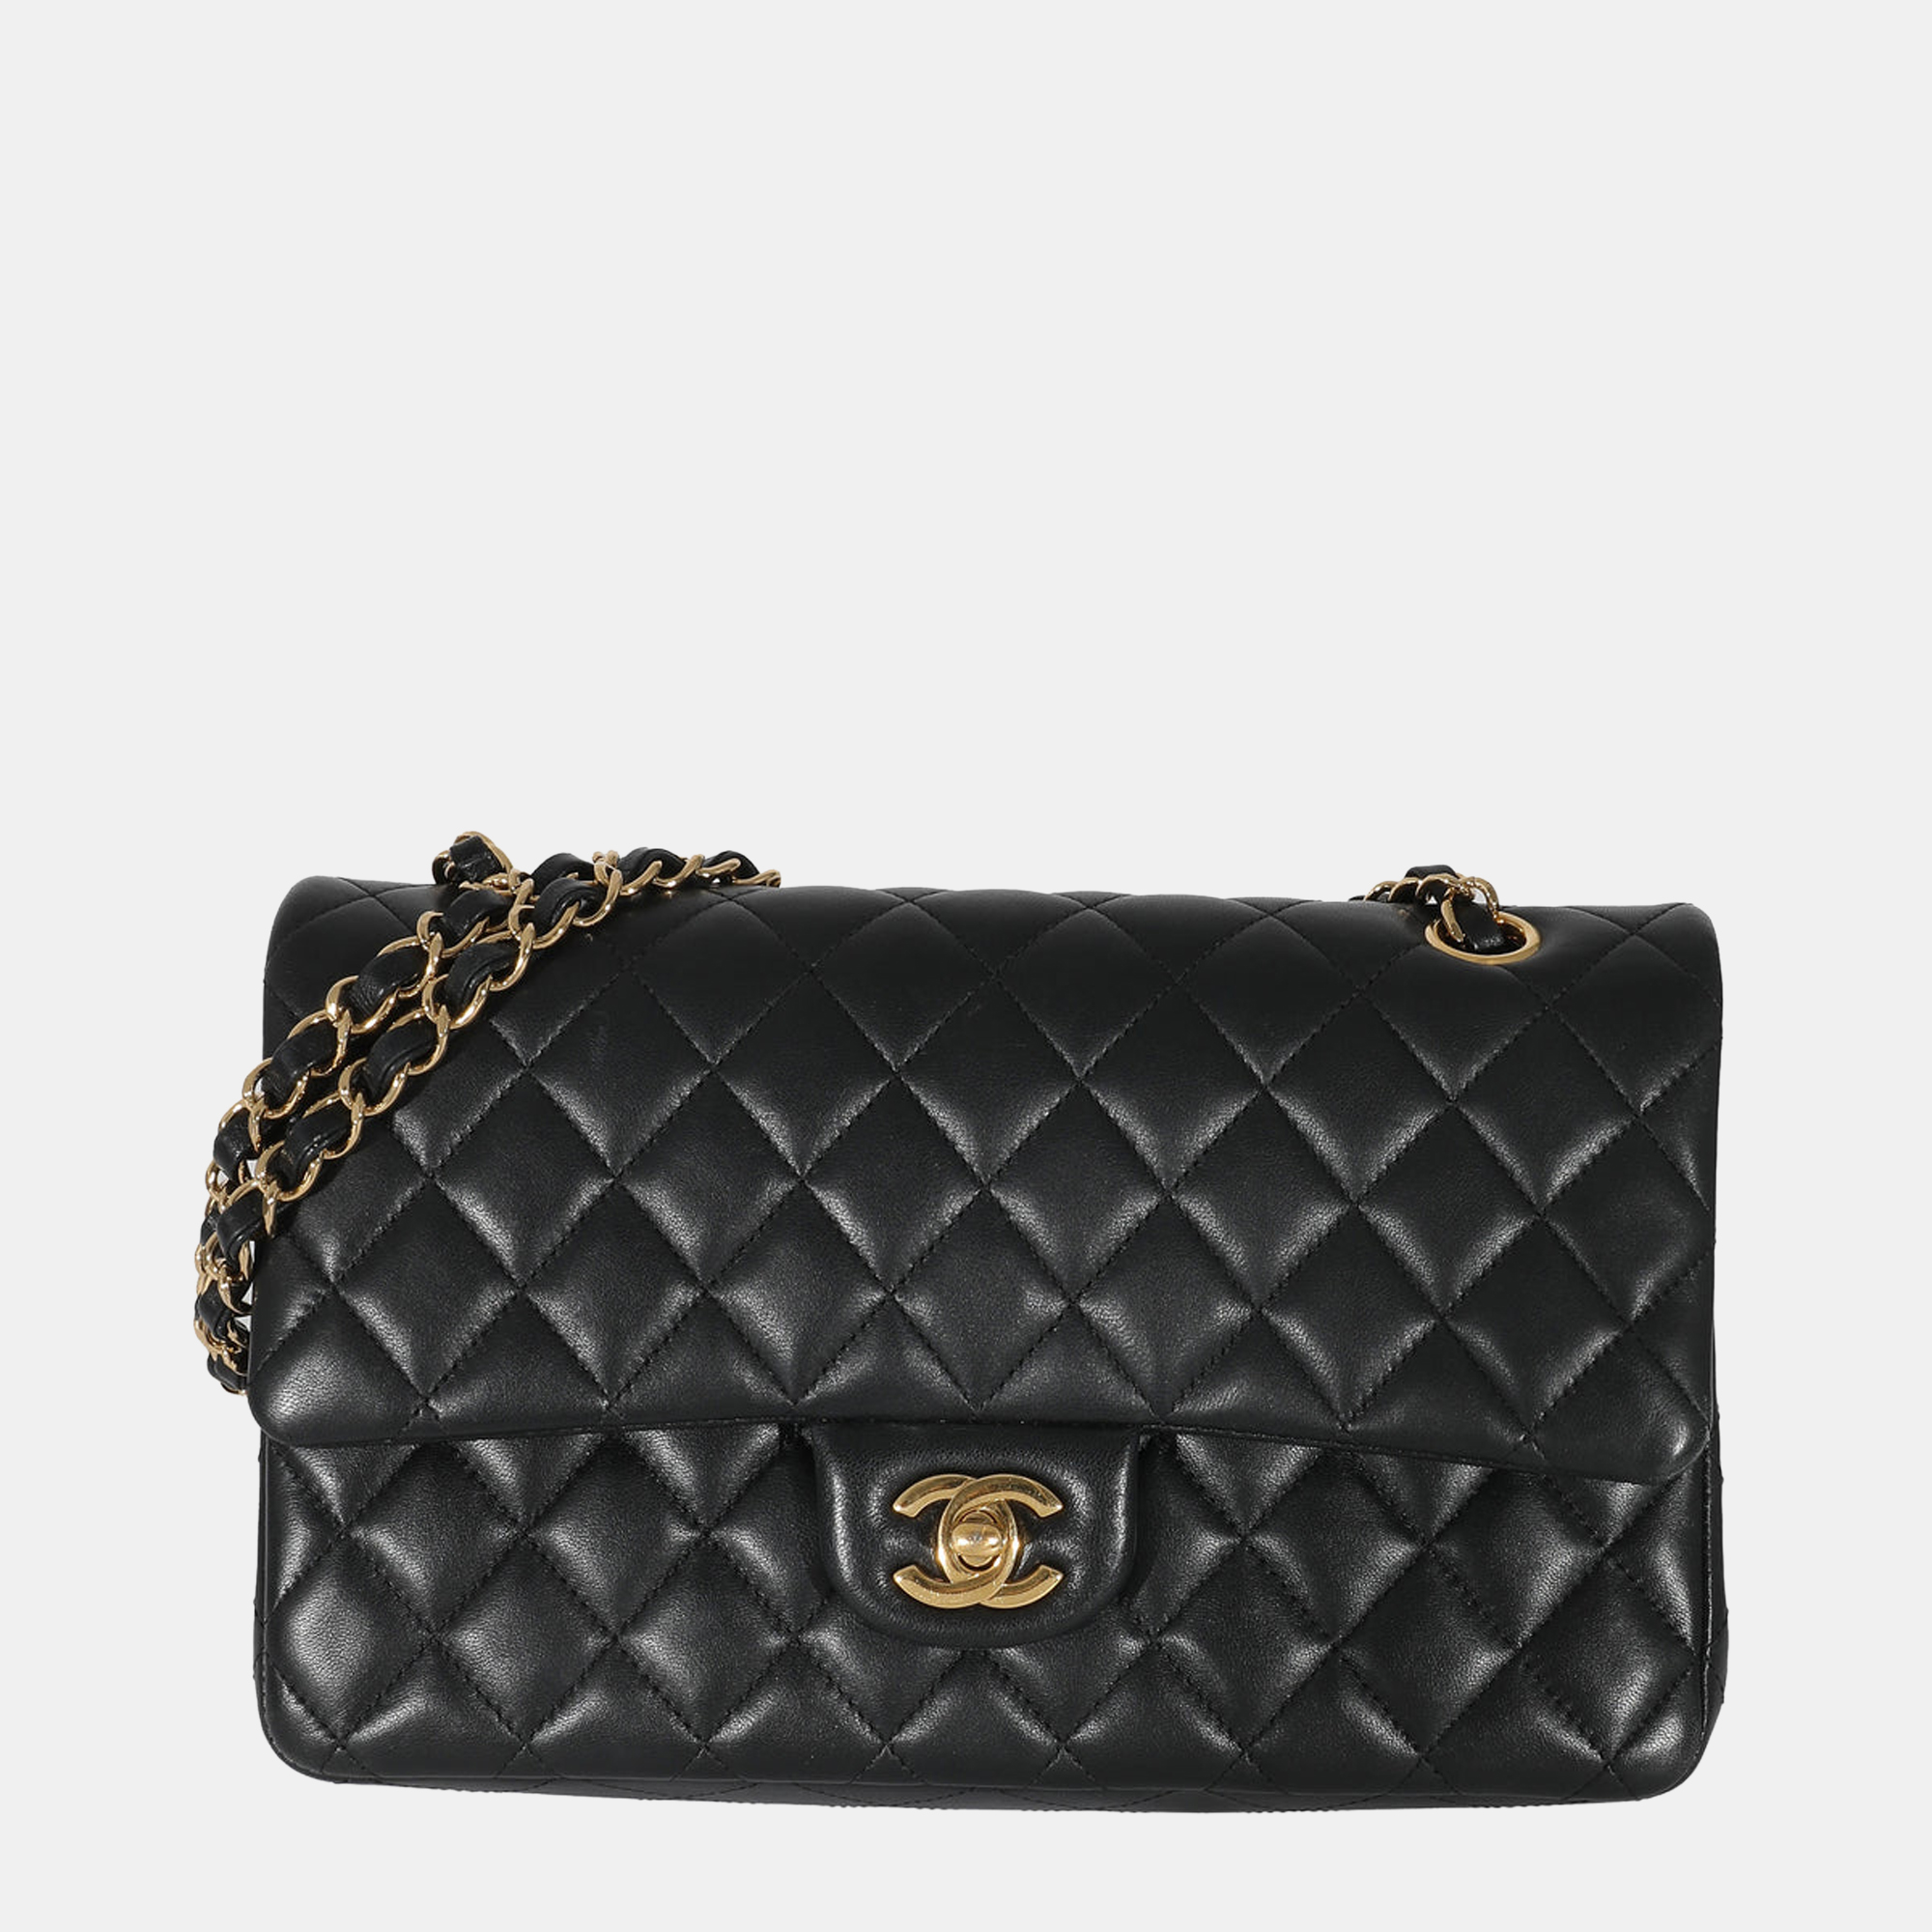 Chanel black lambskin leather medium classic double flap shoulder bag